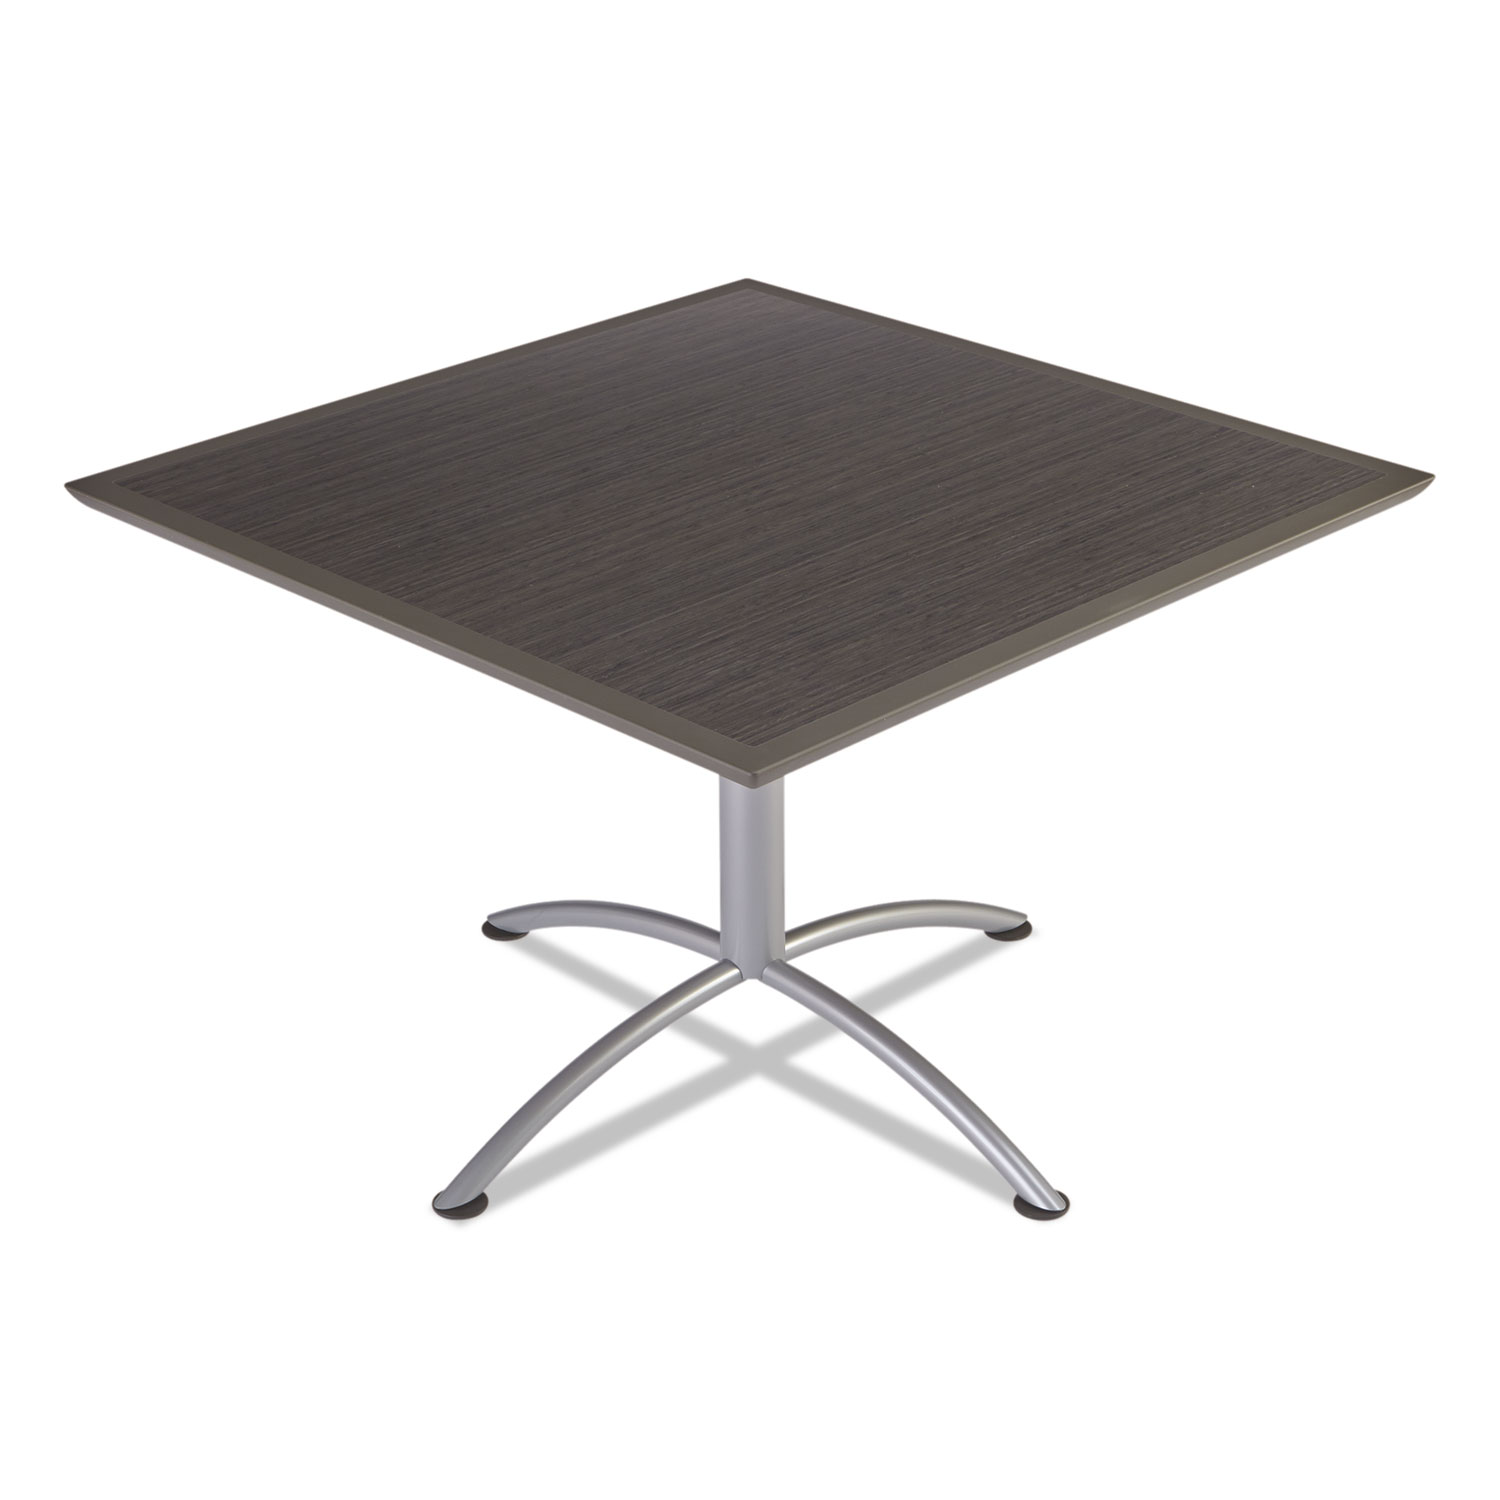 iLand Table, Dura Edge, Square Seated Style, 42w x 42d x 29h, Gray Walnut/Silver